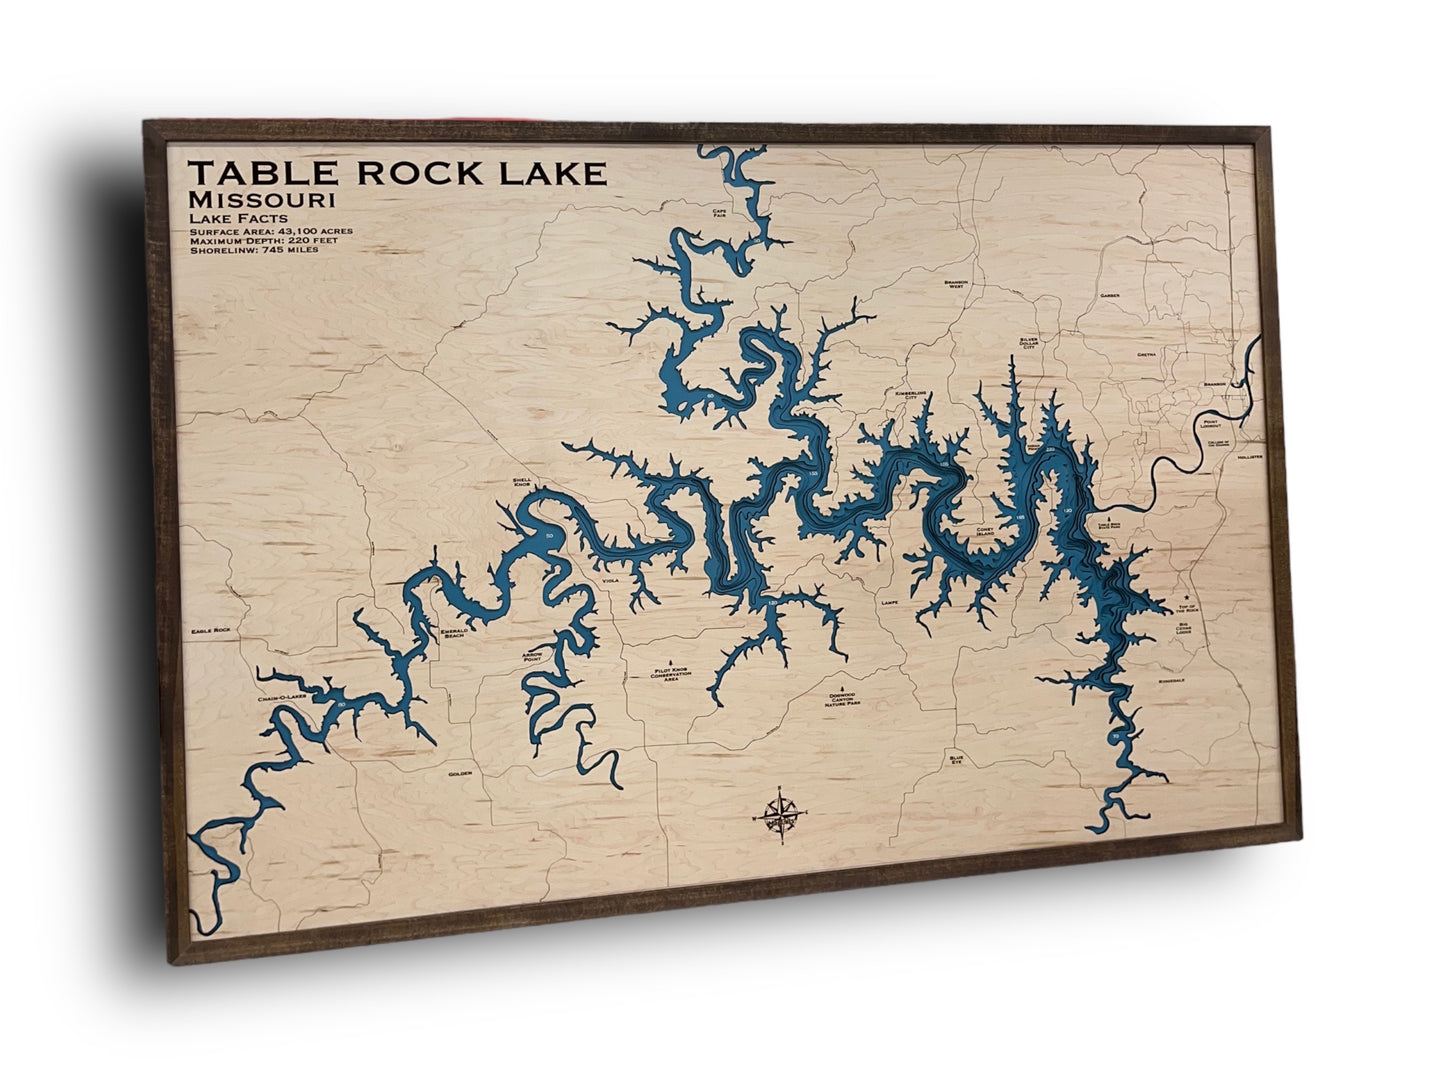 Custom Wood Engraved Lake Maps